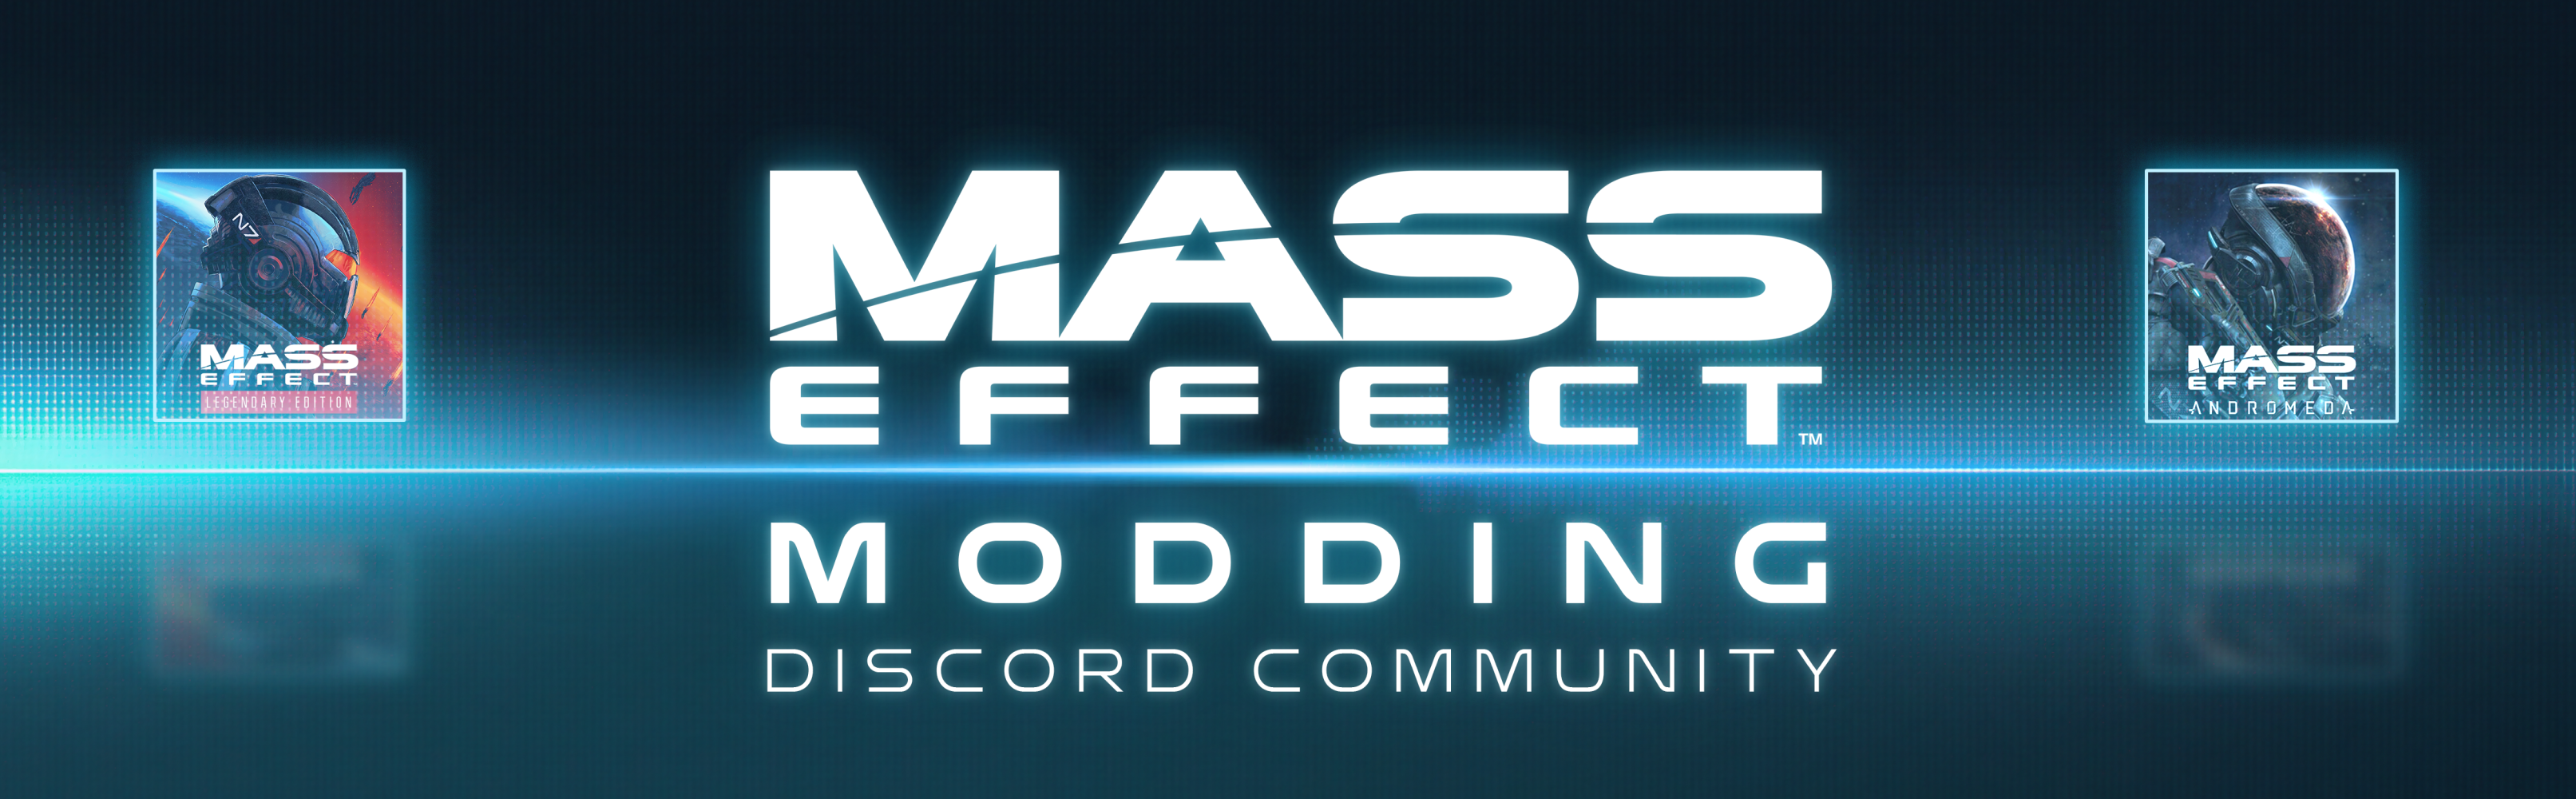 Mass Effect Modding Discord Community